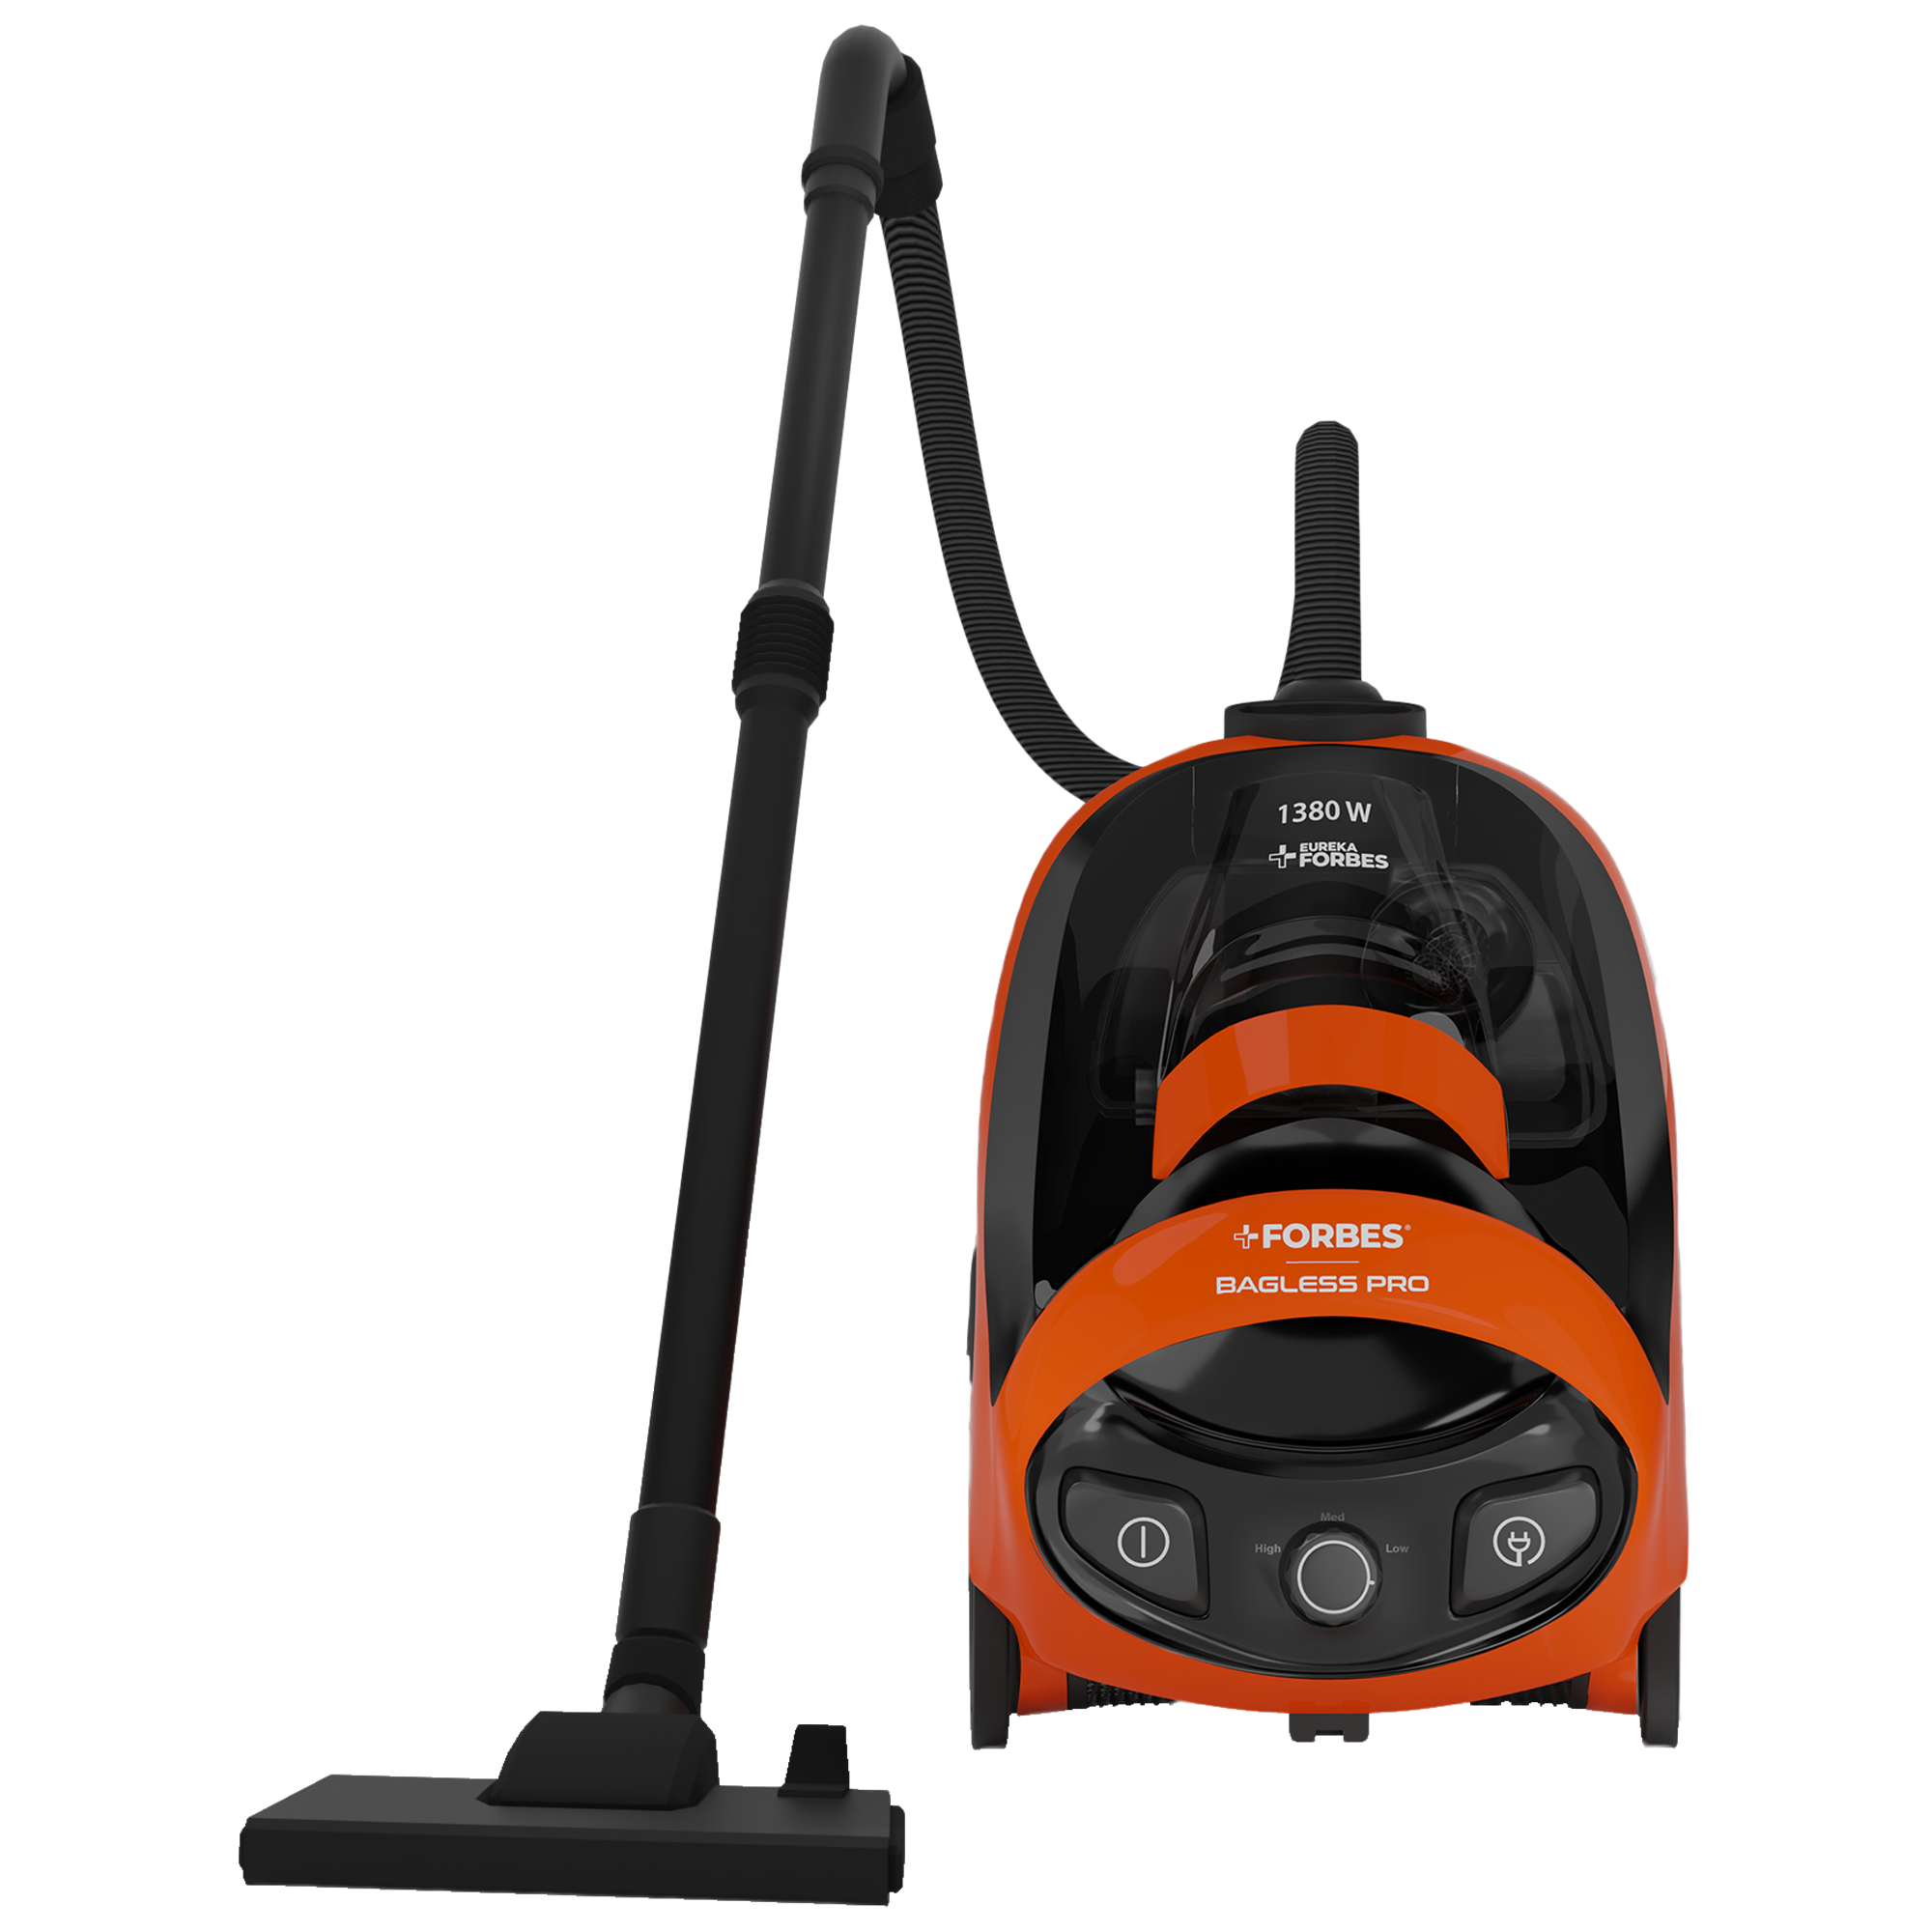 Eureka Forbes Bagless Pro 1380 Watts Dry Vacuum Cleaner (Cyclonic Technology, GFCDBAGPRO0000, Orange and Black)